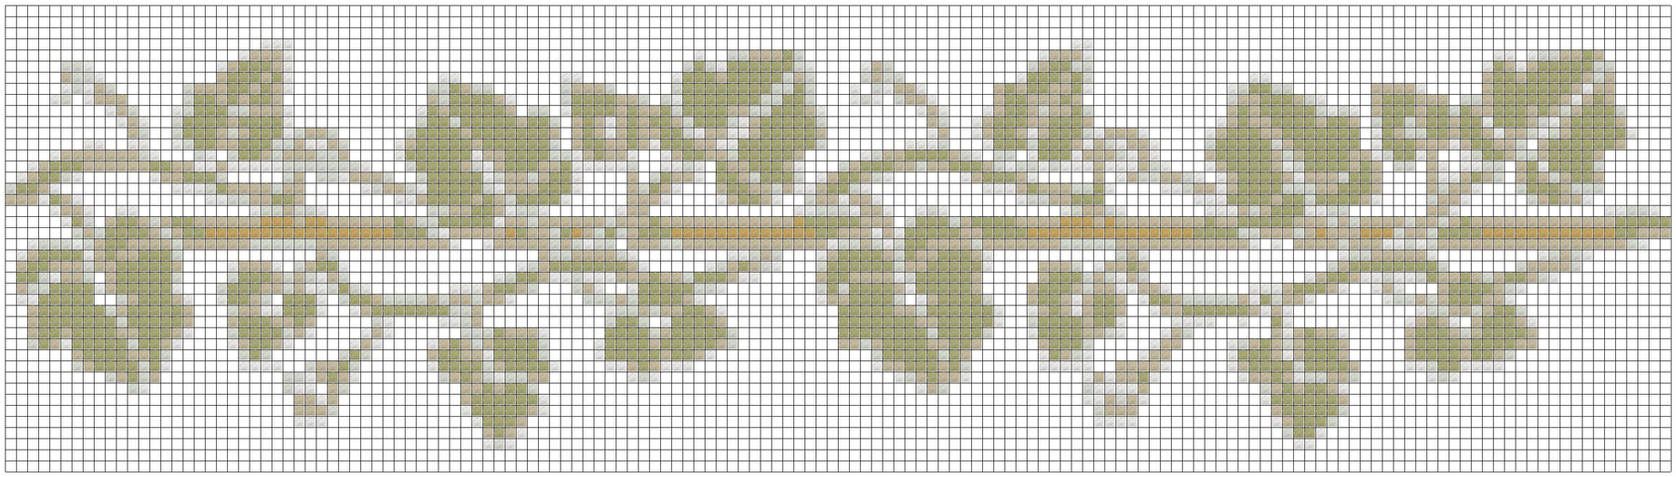 Ivy vine border cross stitch chart